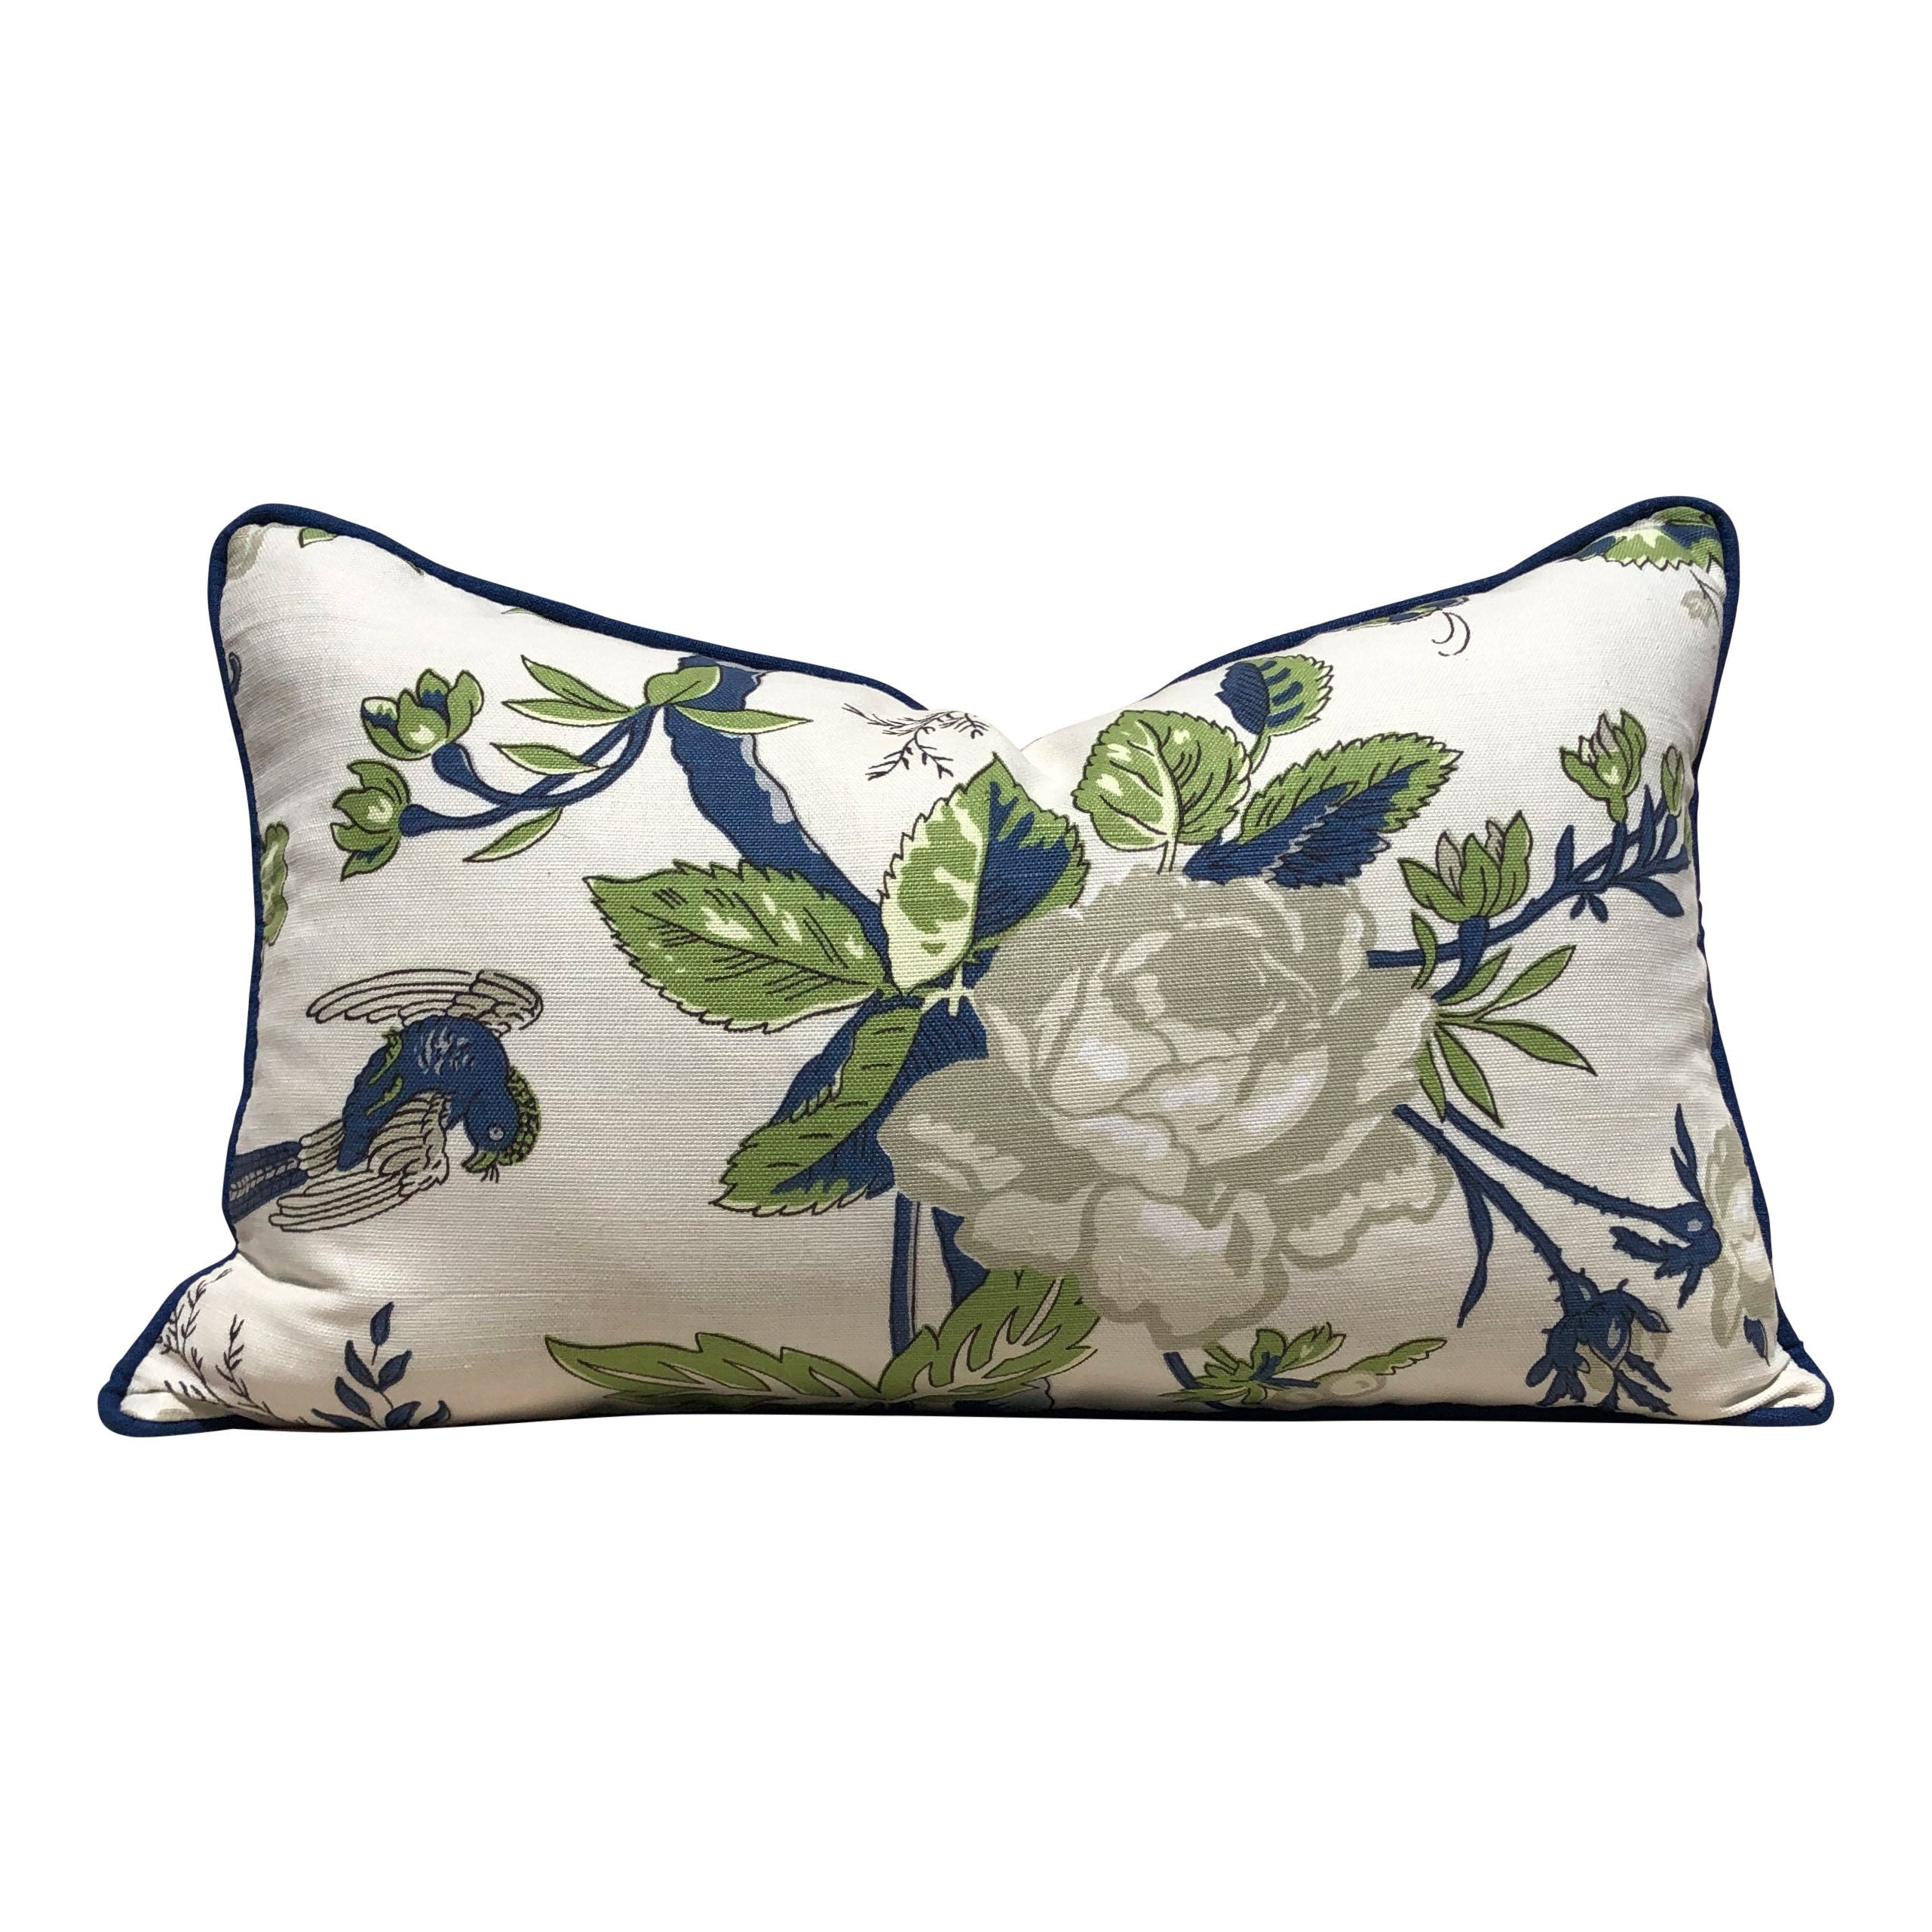 Thibaut Nemour Floral Pillow In Green, Blue. Designer pillows, accent cushion cover, decorative green pillow, high end pillow cover.